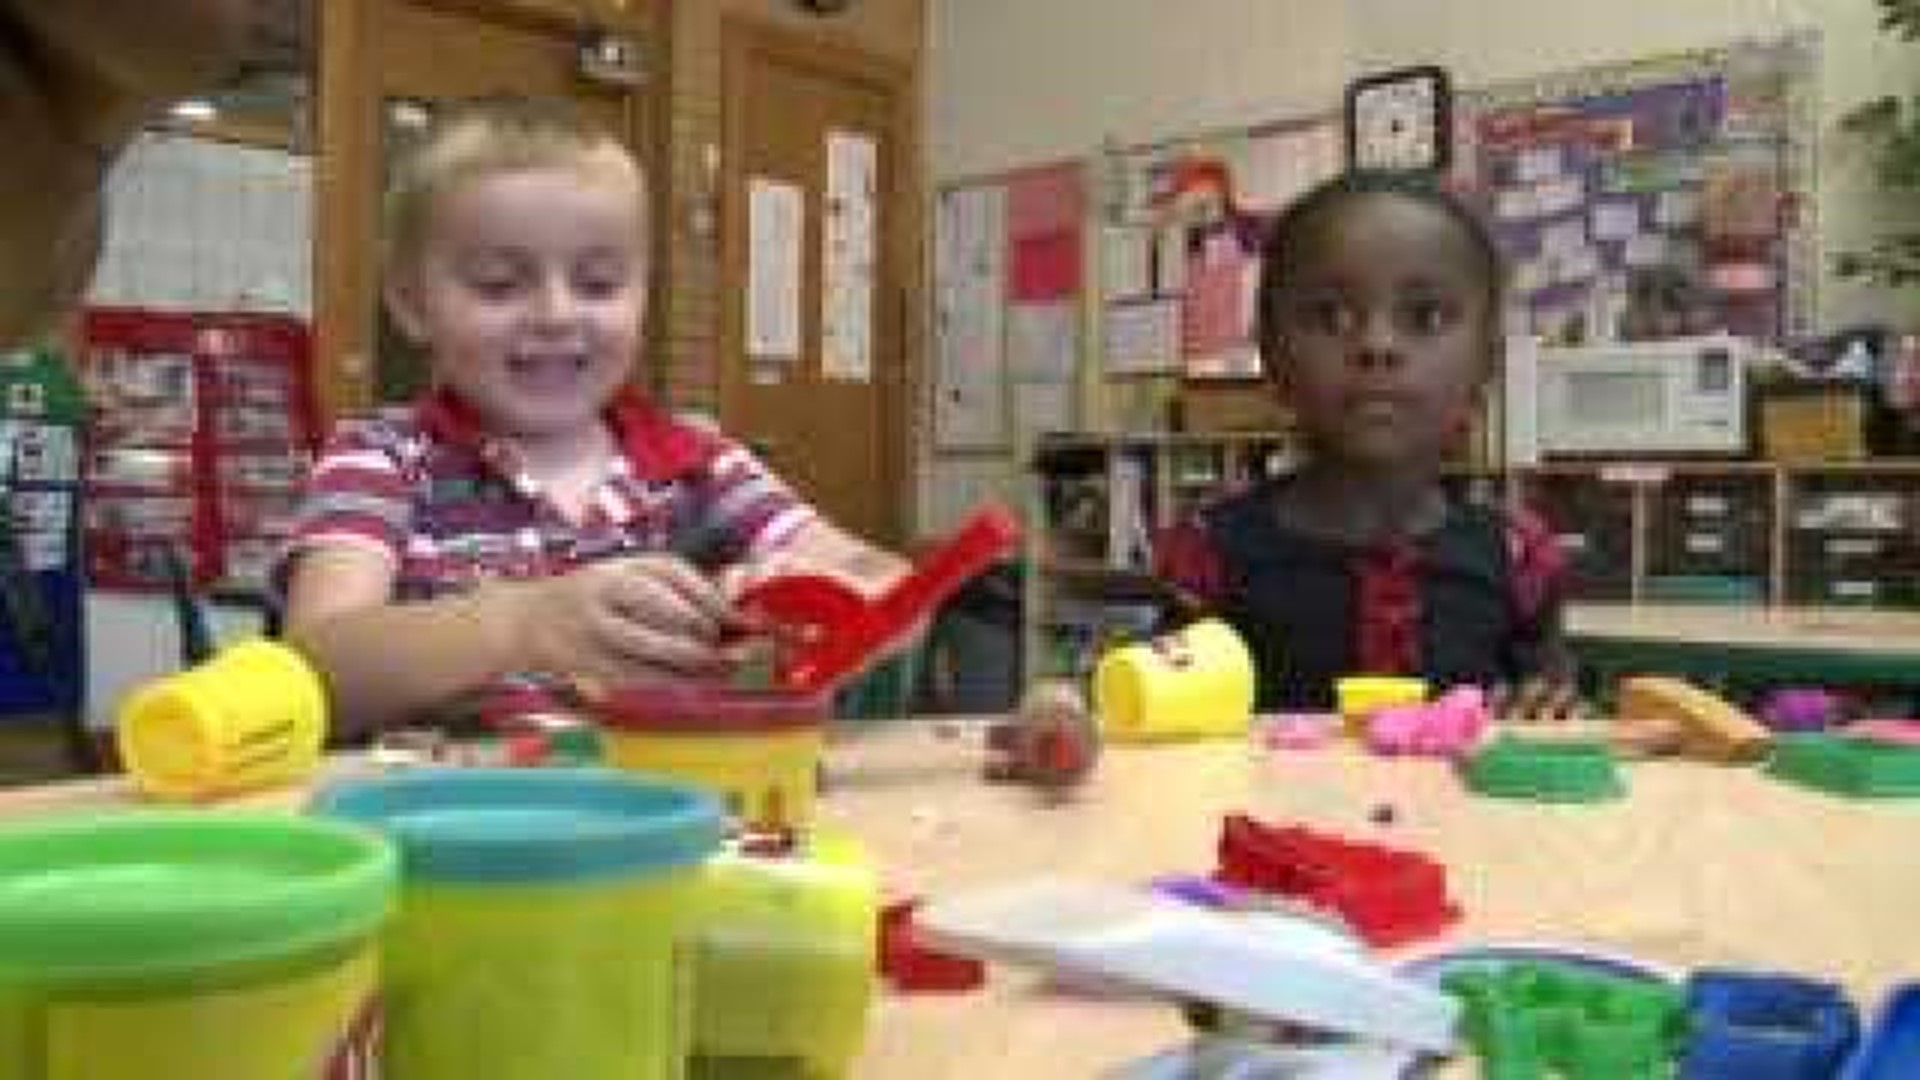 Free preschool for Iowa 4-year-olds